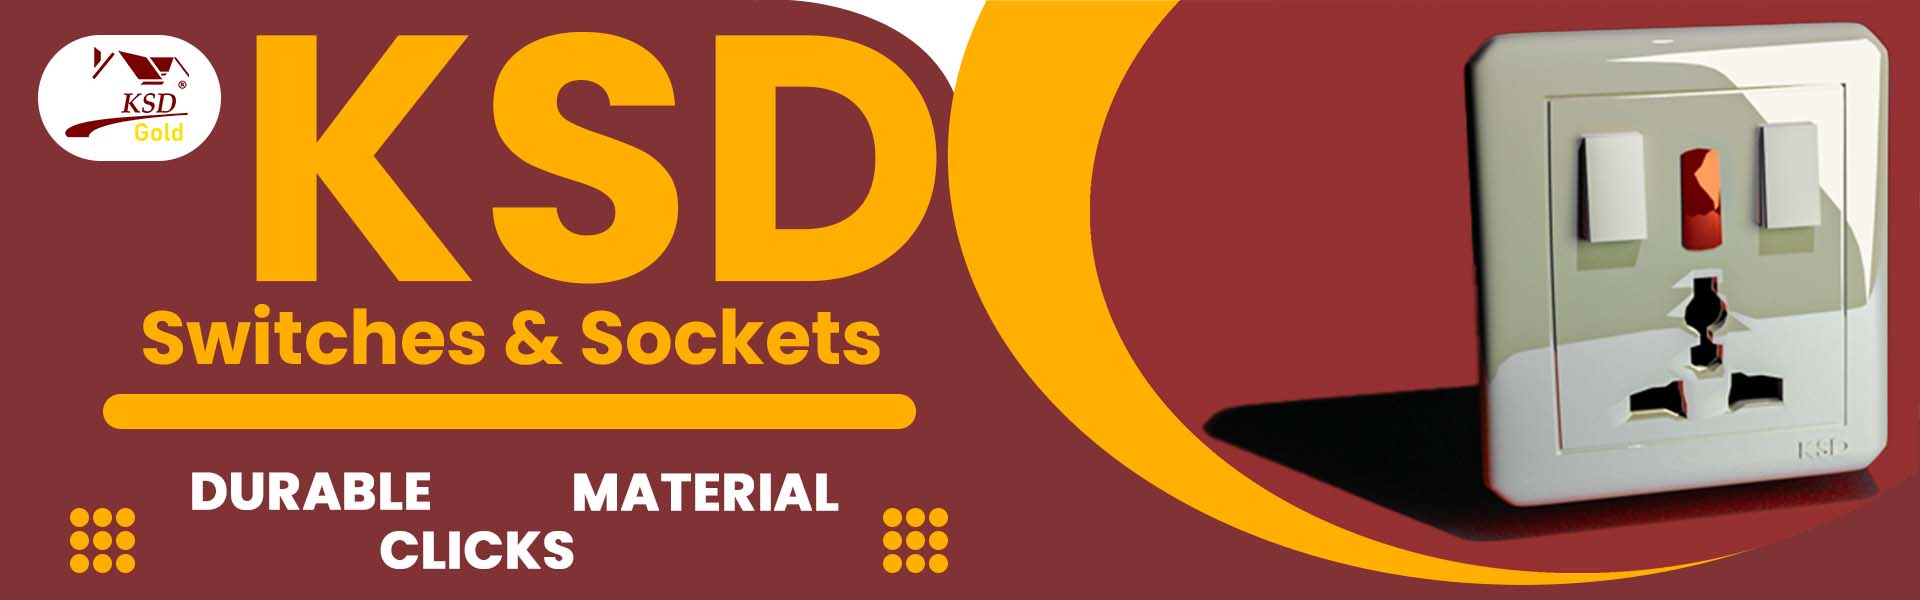 KSD Switches & Sockets